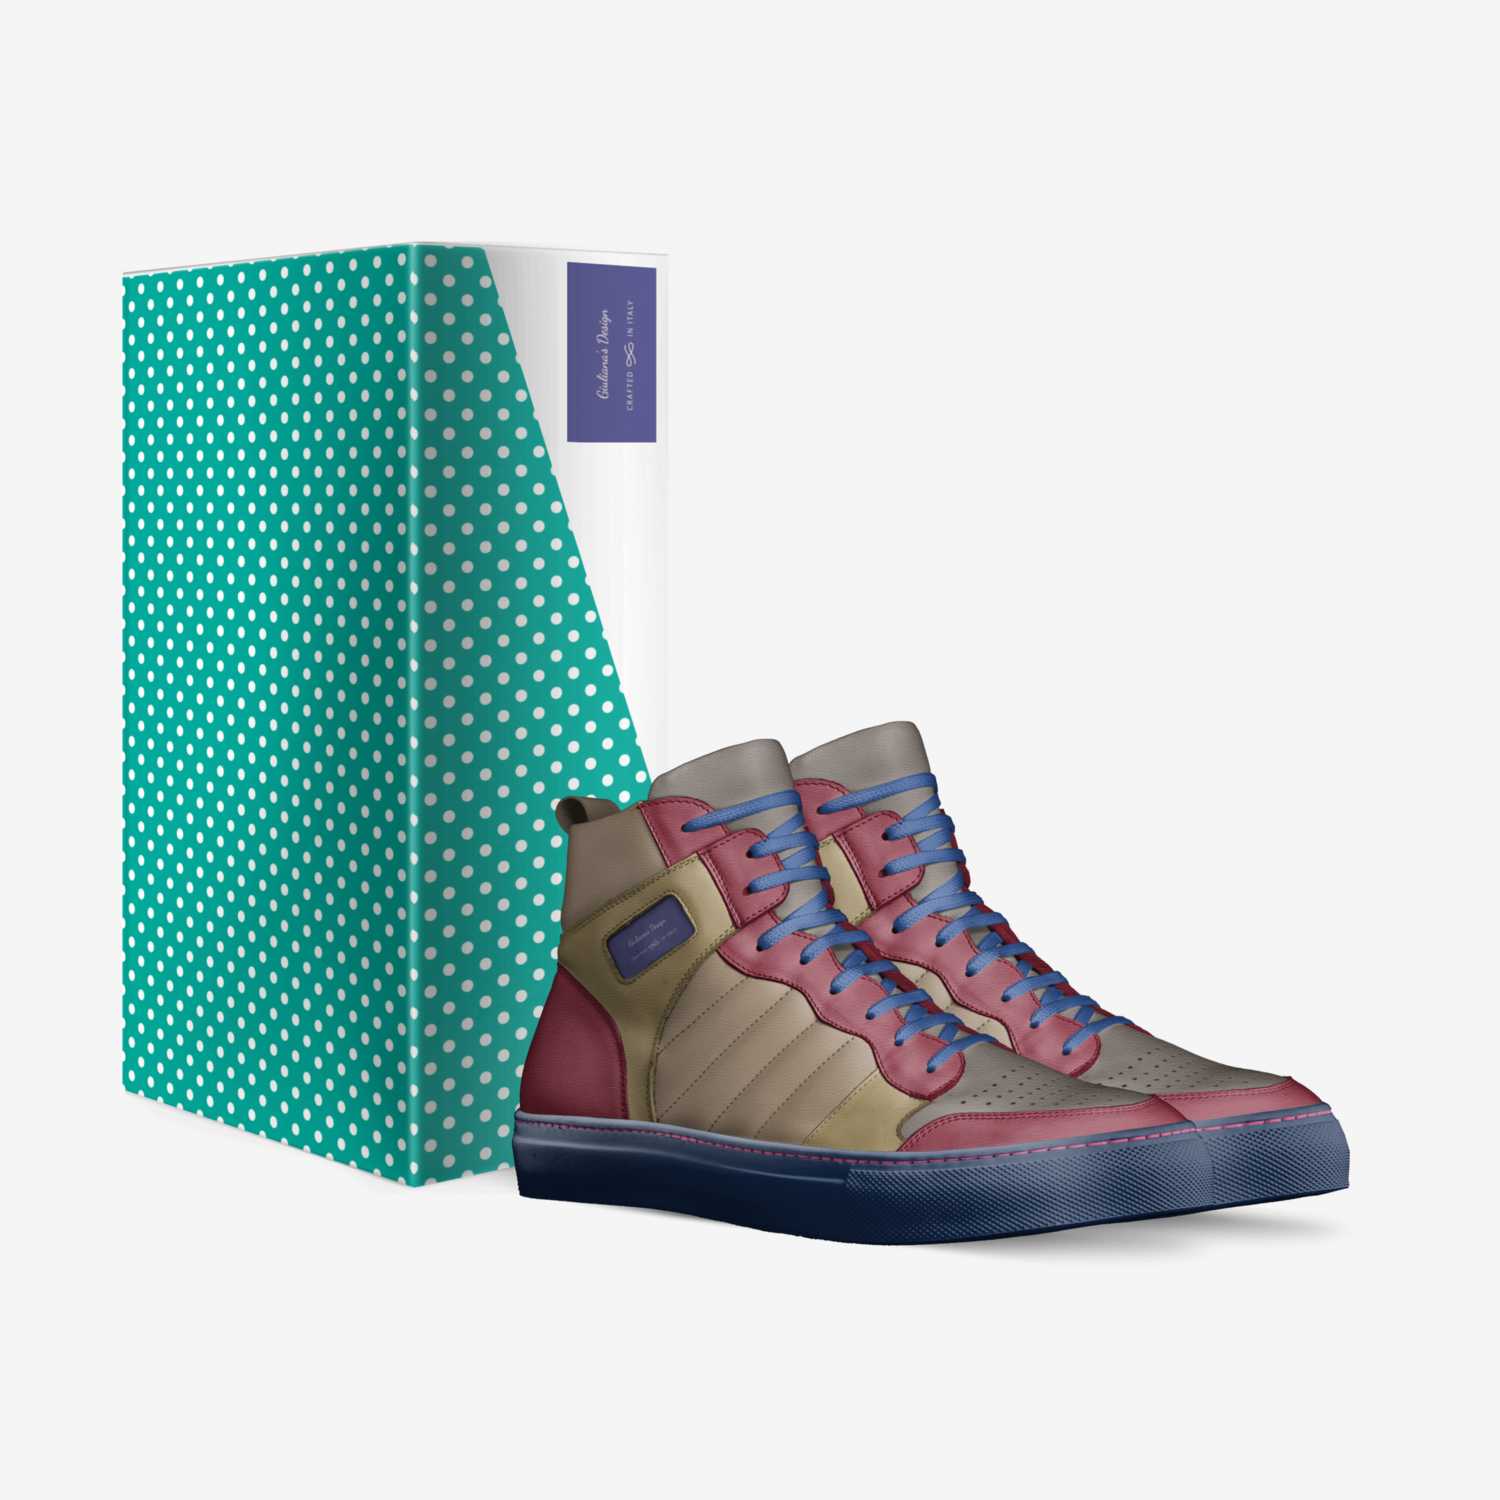 Giuliana's Design custom made in Italy shoes by Thomas Major | Box view